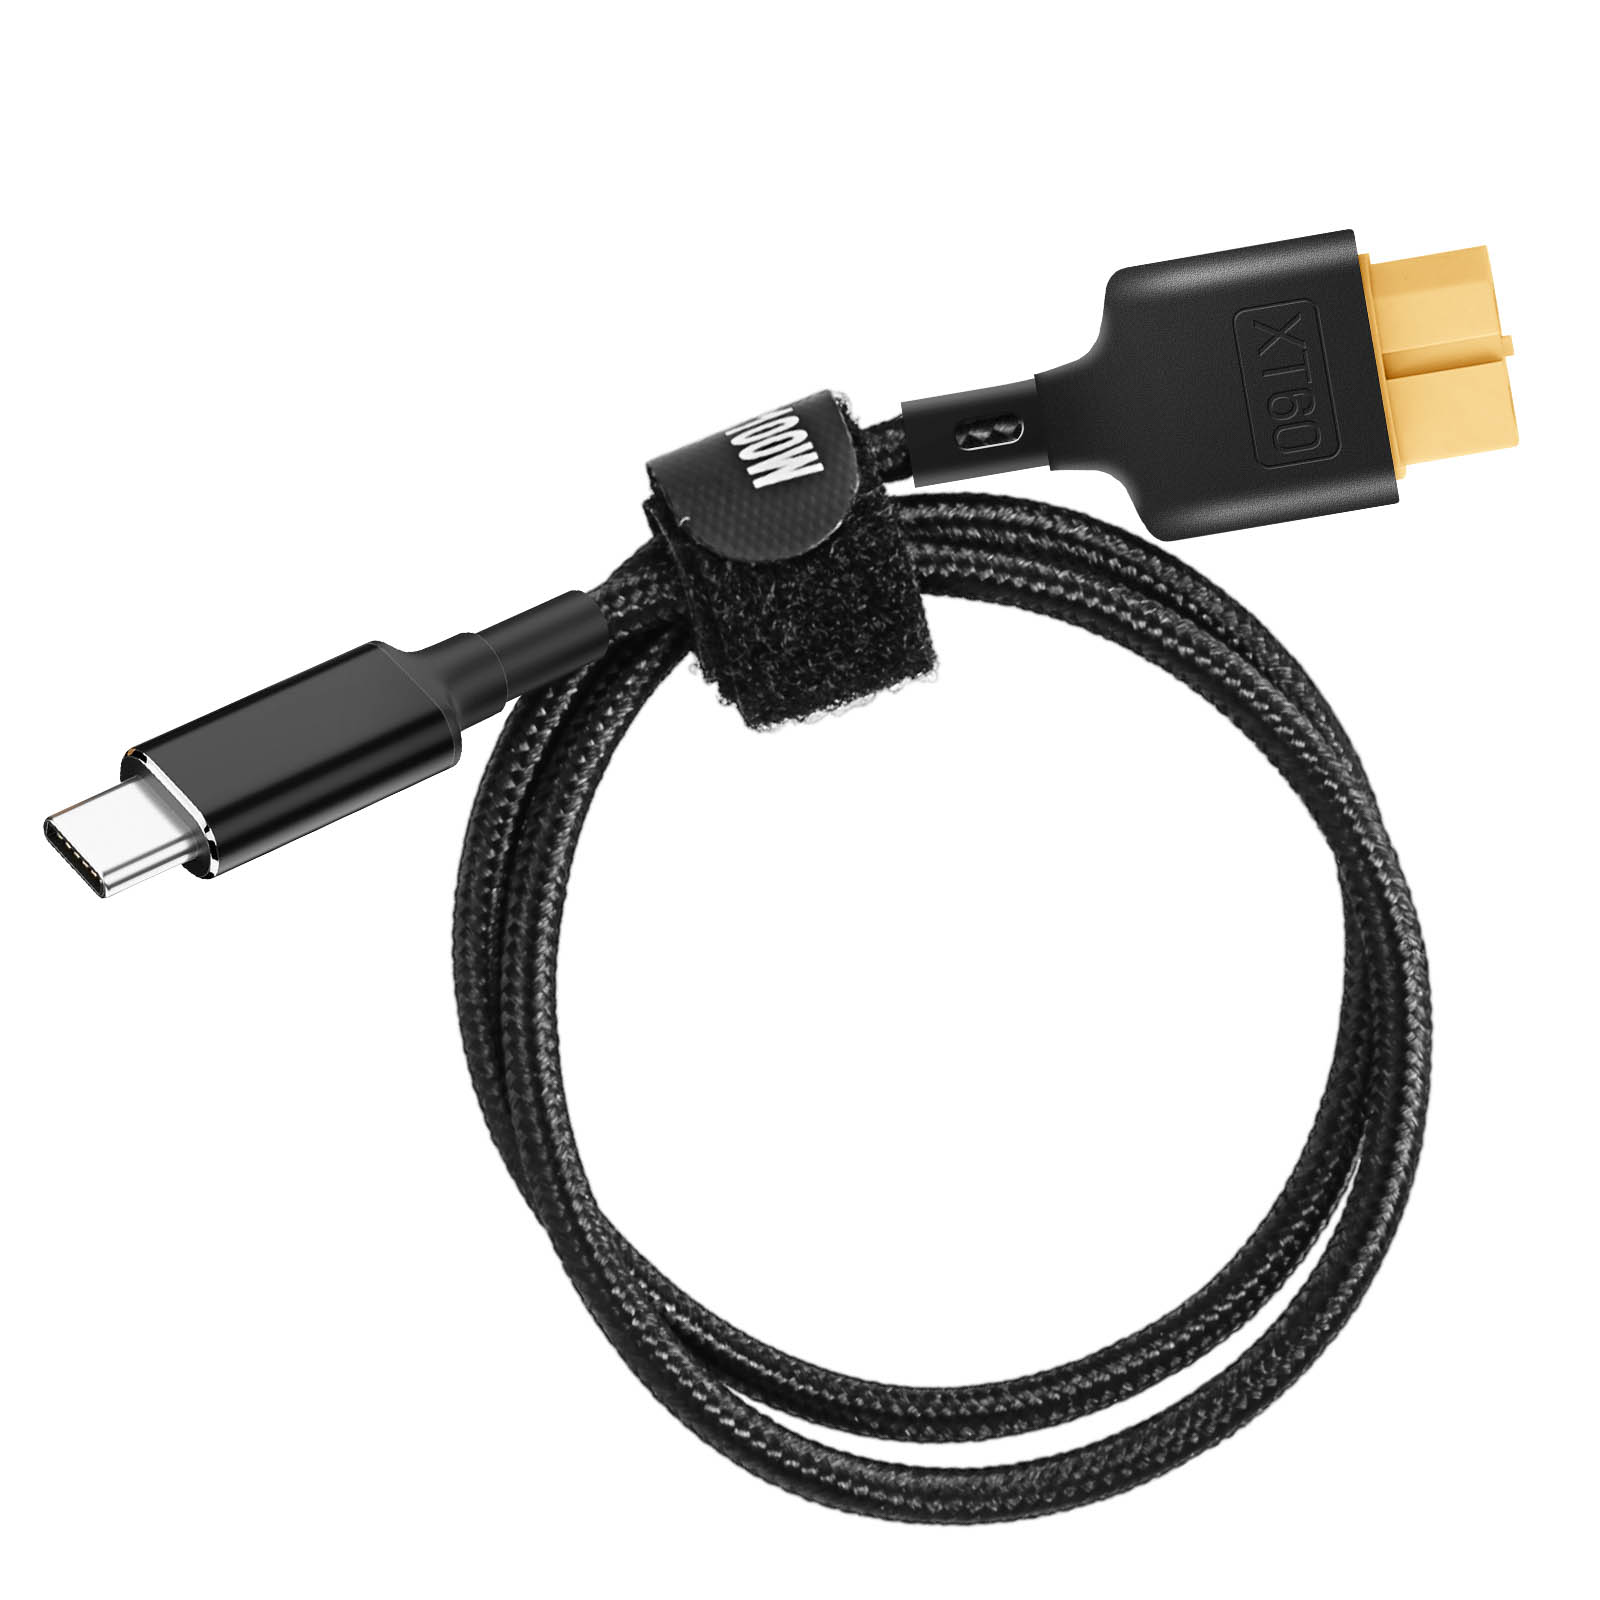 AVIZAR USB-C / USB-Kabel 50cm 100W, XT60